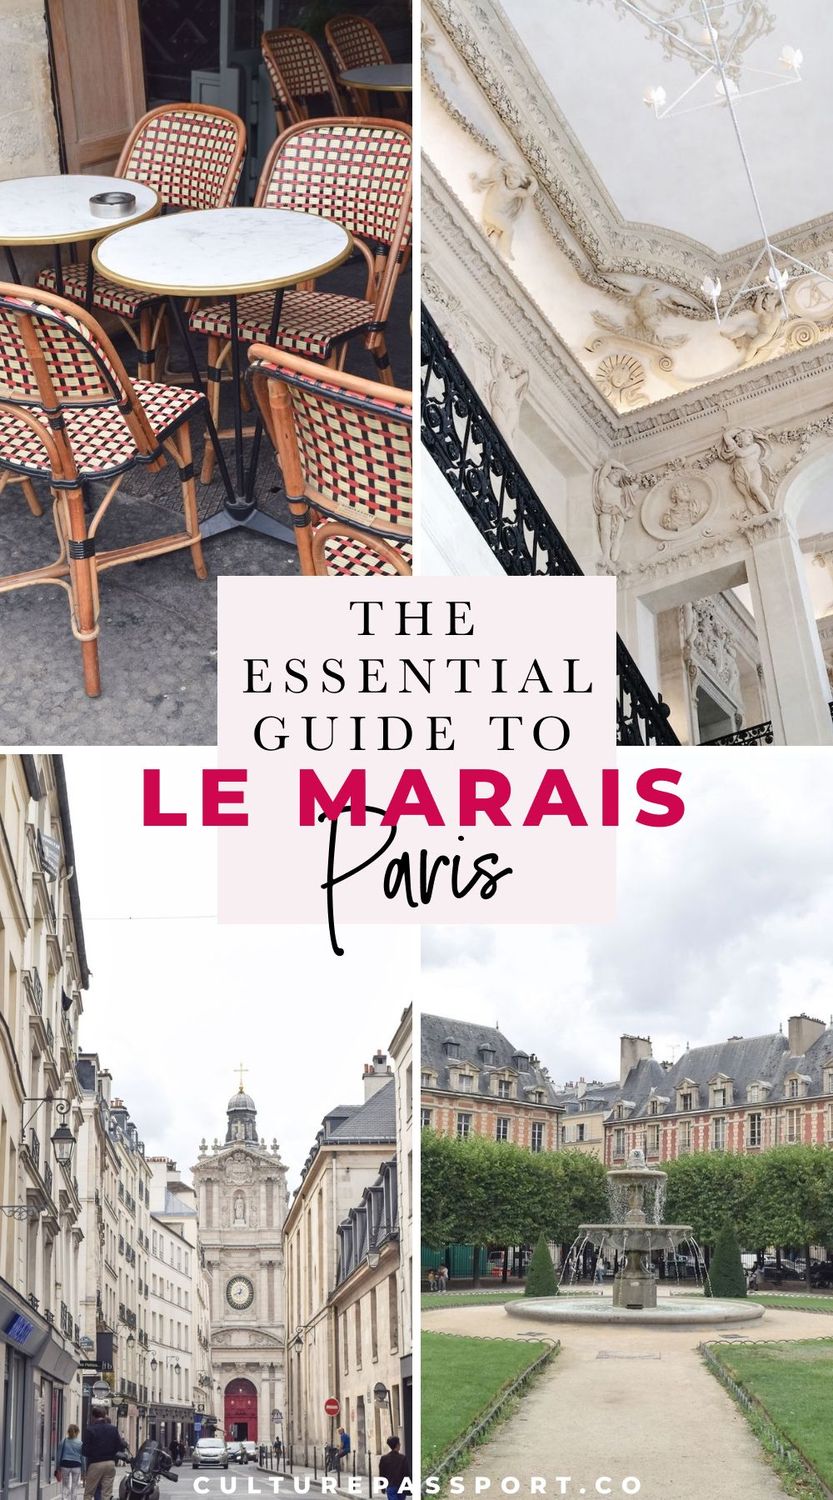 The Essential Guide to Le Marais